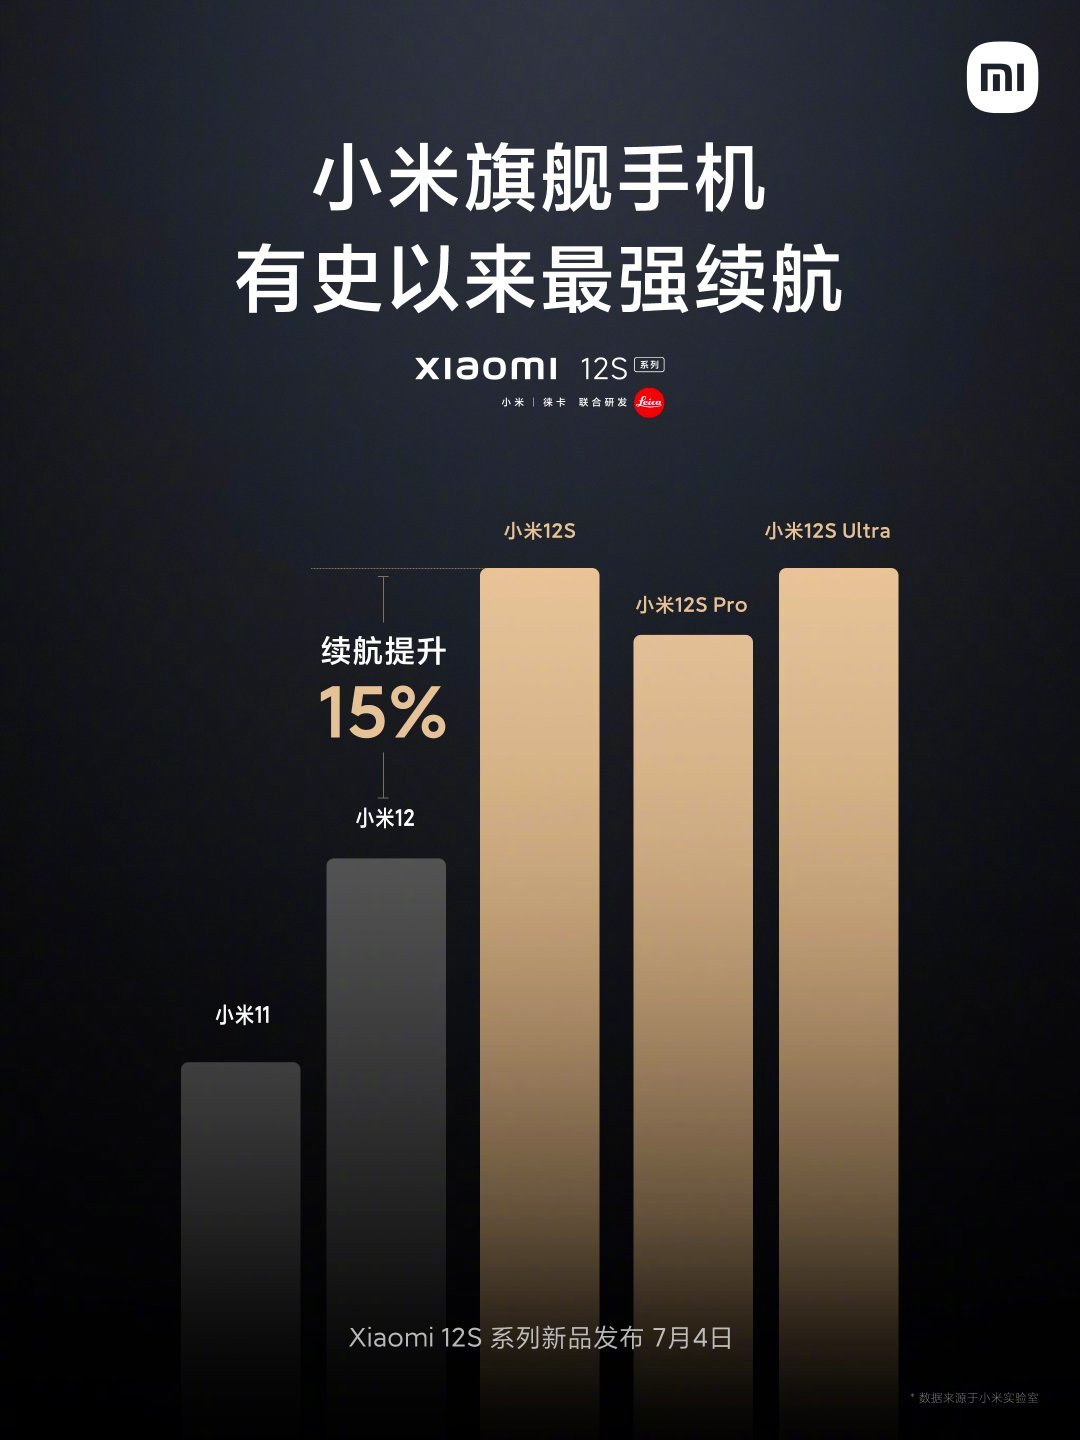 Xiaomi 12S battery life